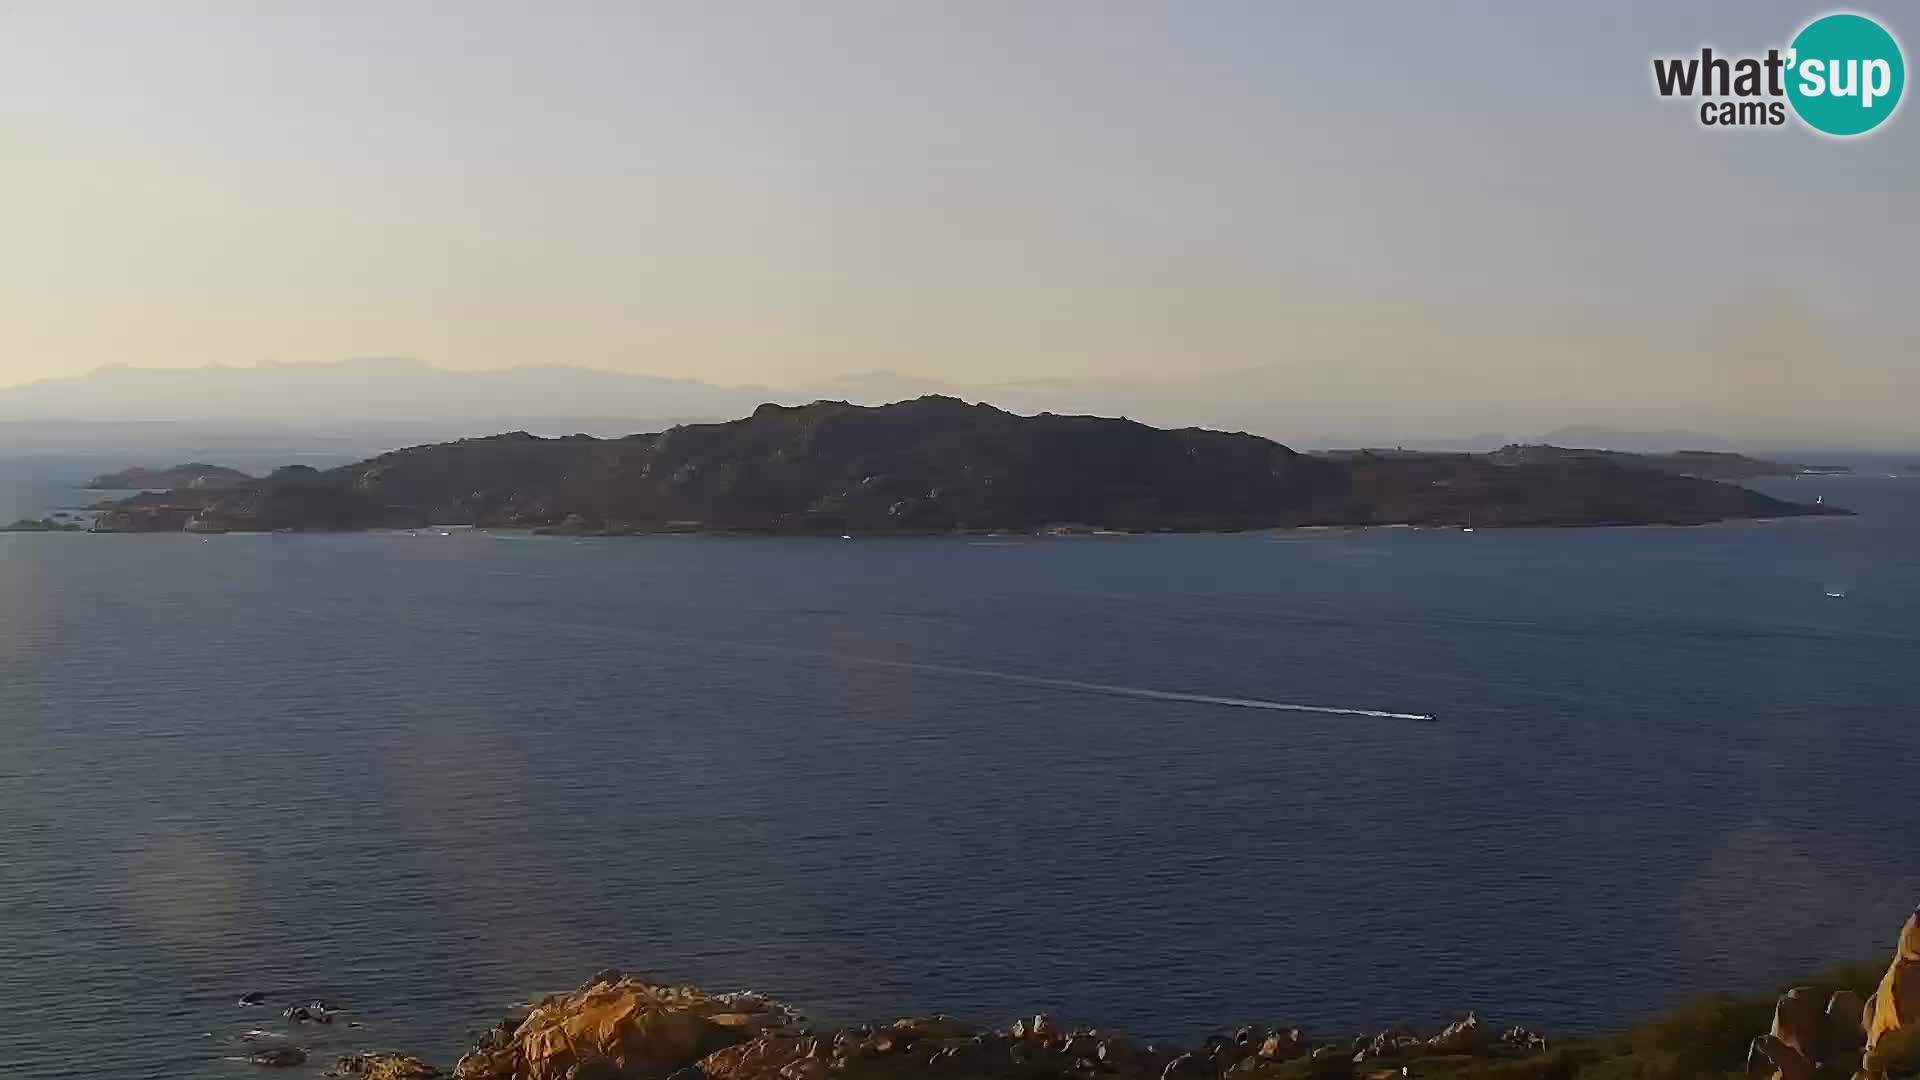 Punta Sardegna camera en vivo la Vedetta – Palau – Maddalena